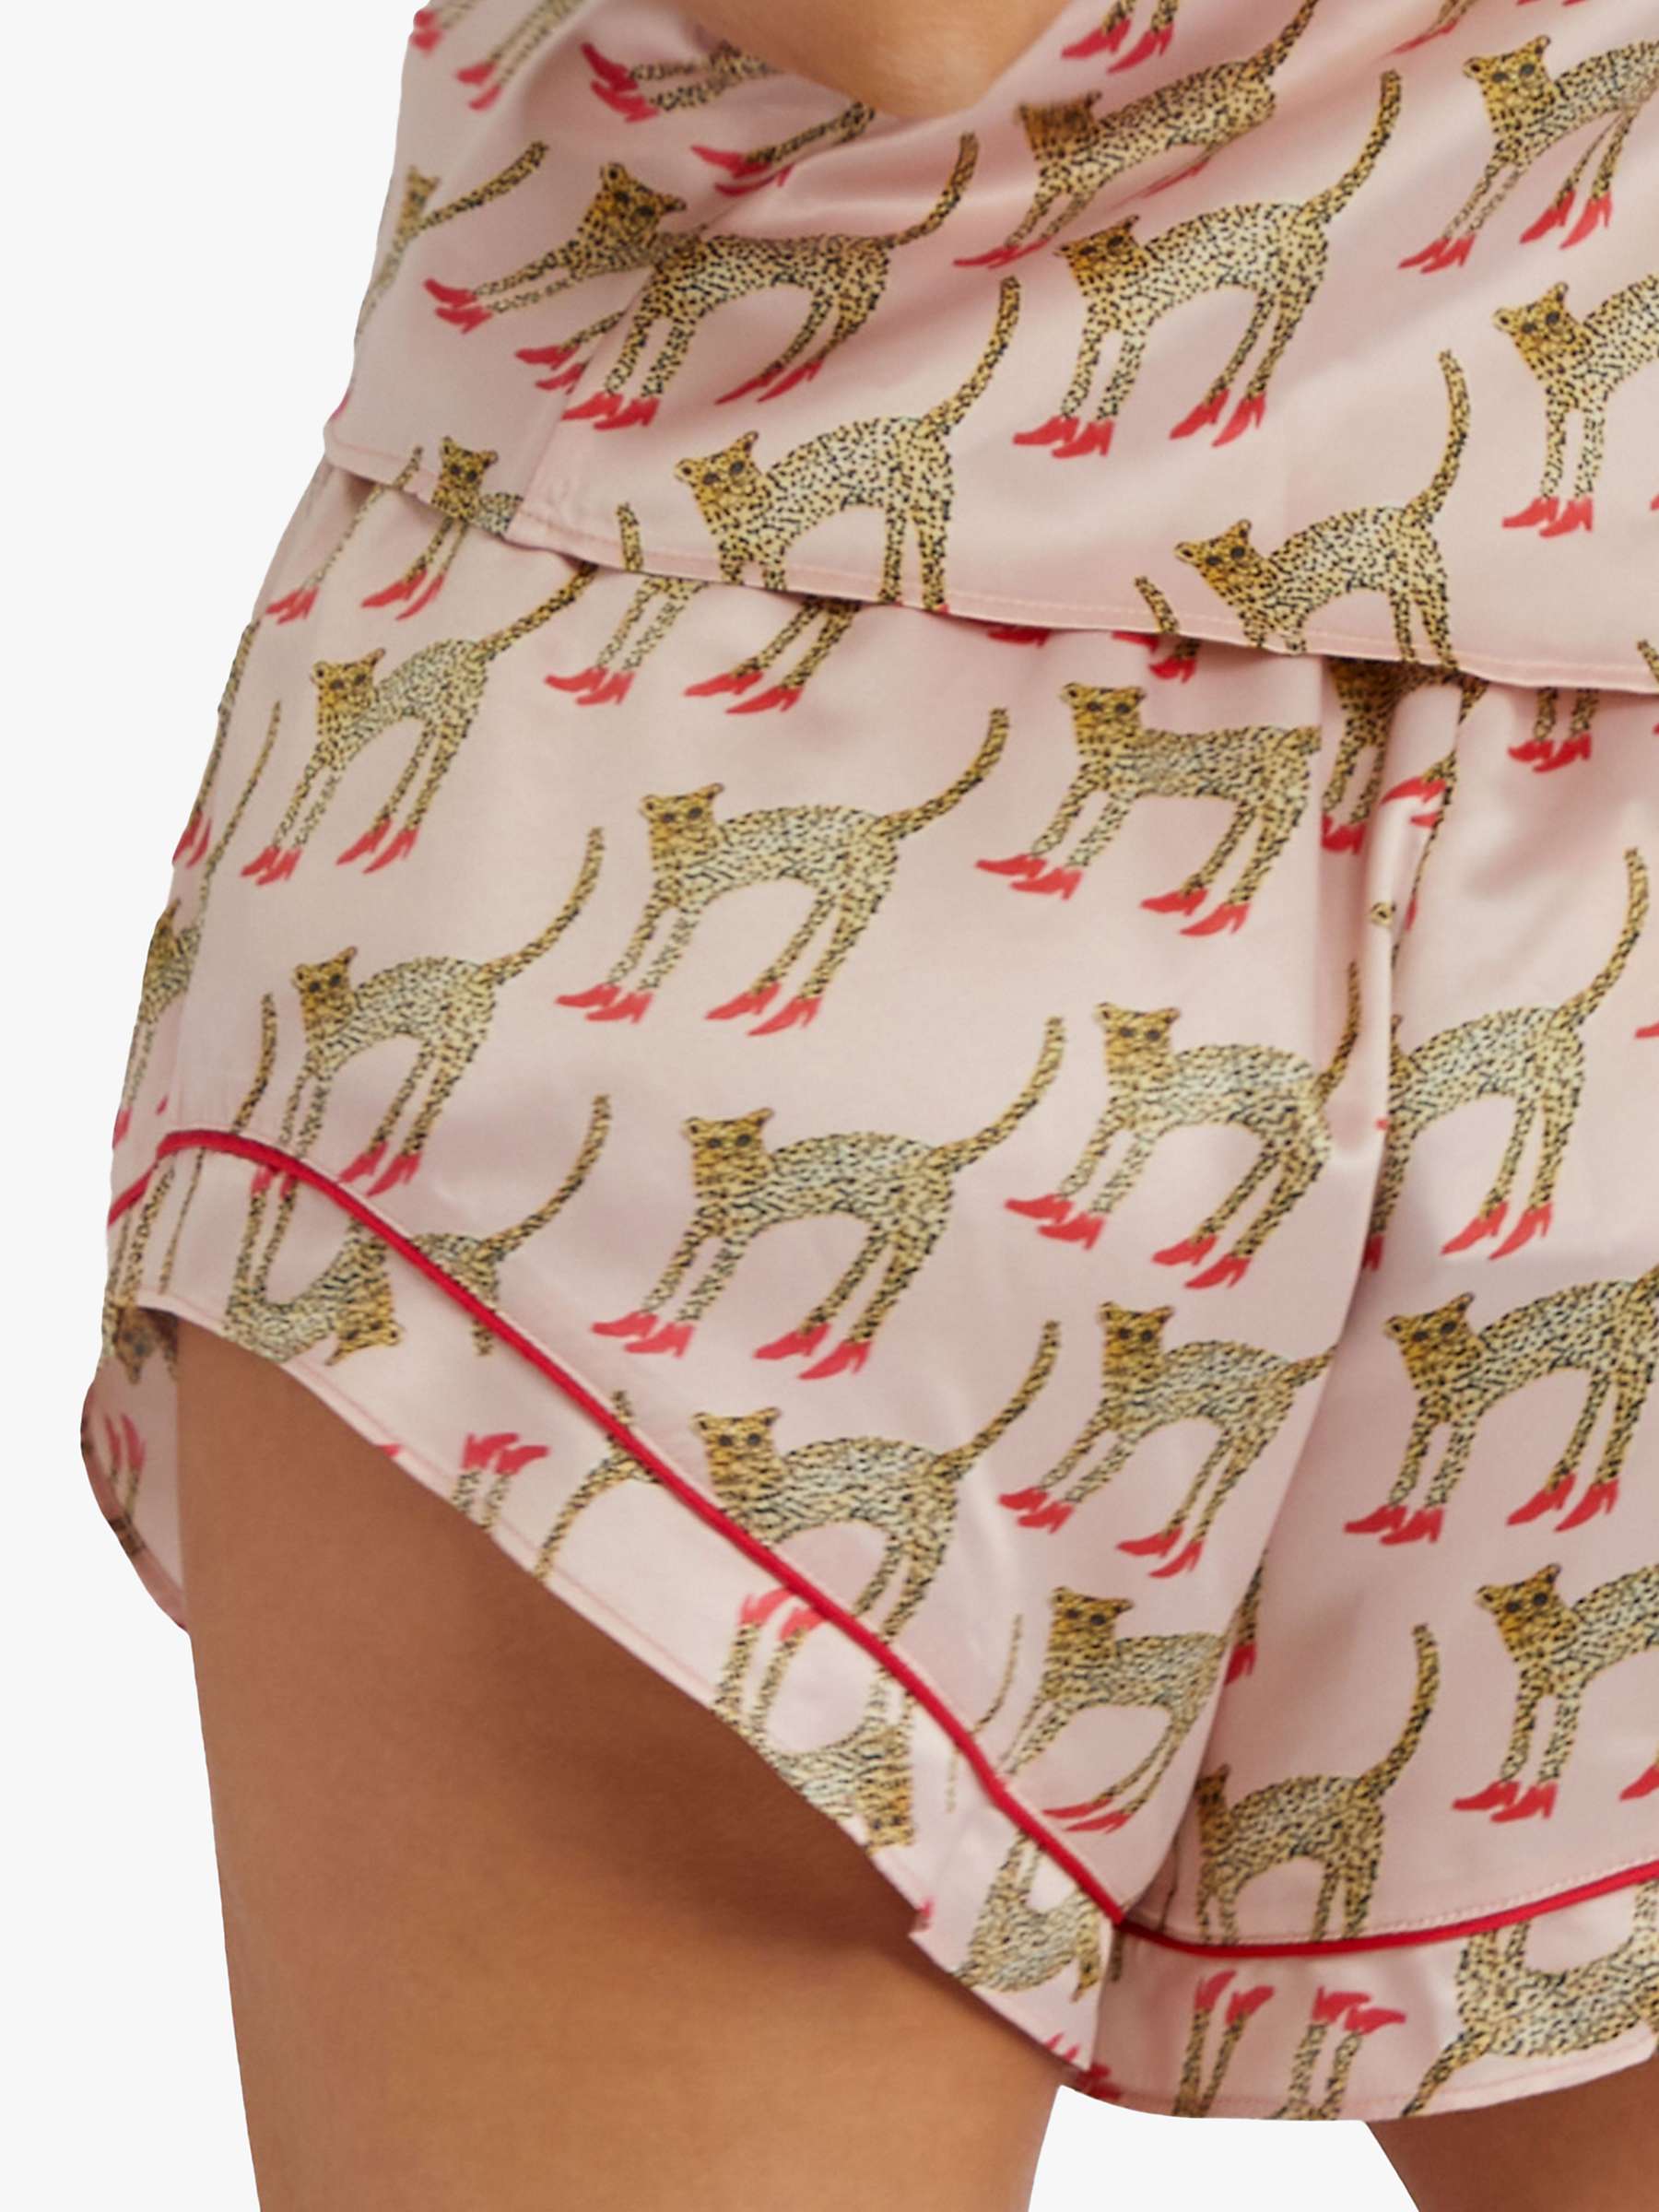 Buy Playful Promises Bouffants Cheetah in Heels Pyjama Shorts, Mixed Print Online at johnlewis.com